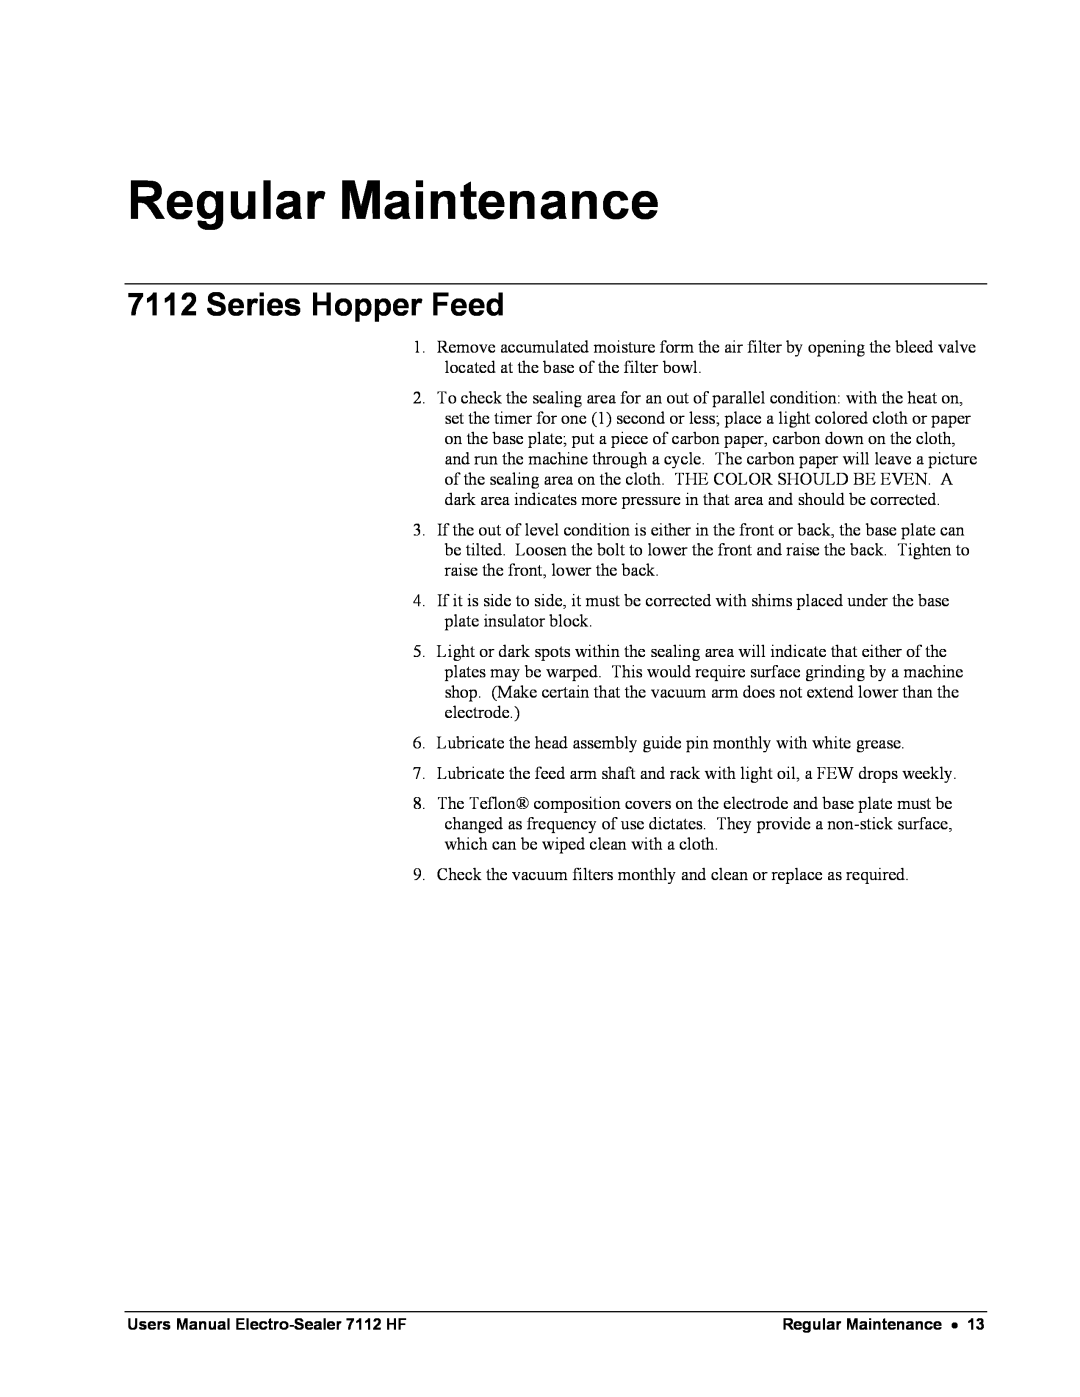 Avery 7112 HF user manual Regular Maintenance, Series Hopper Feed 